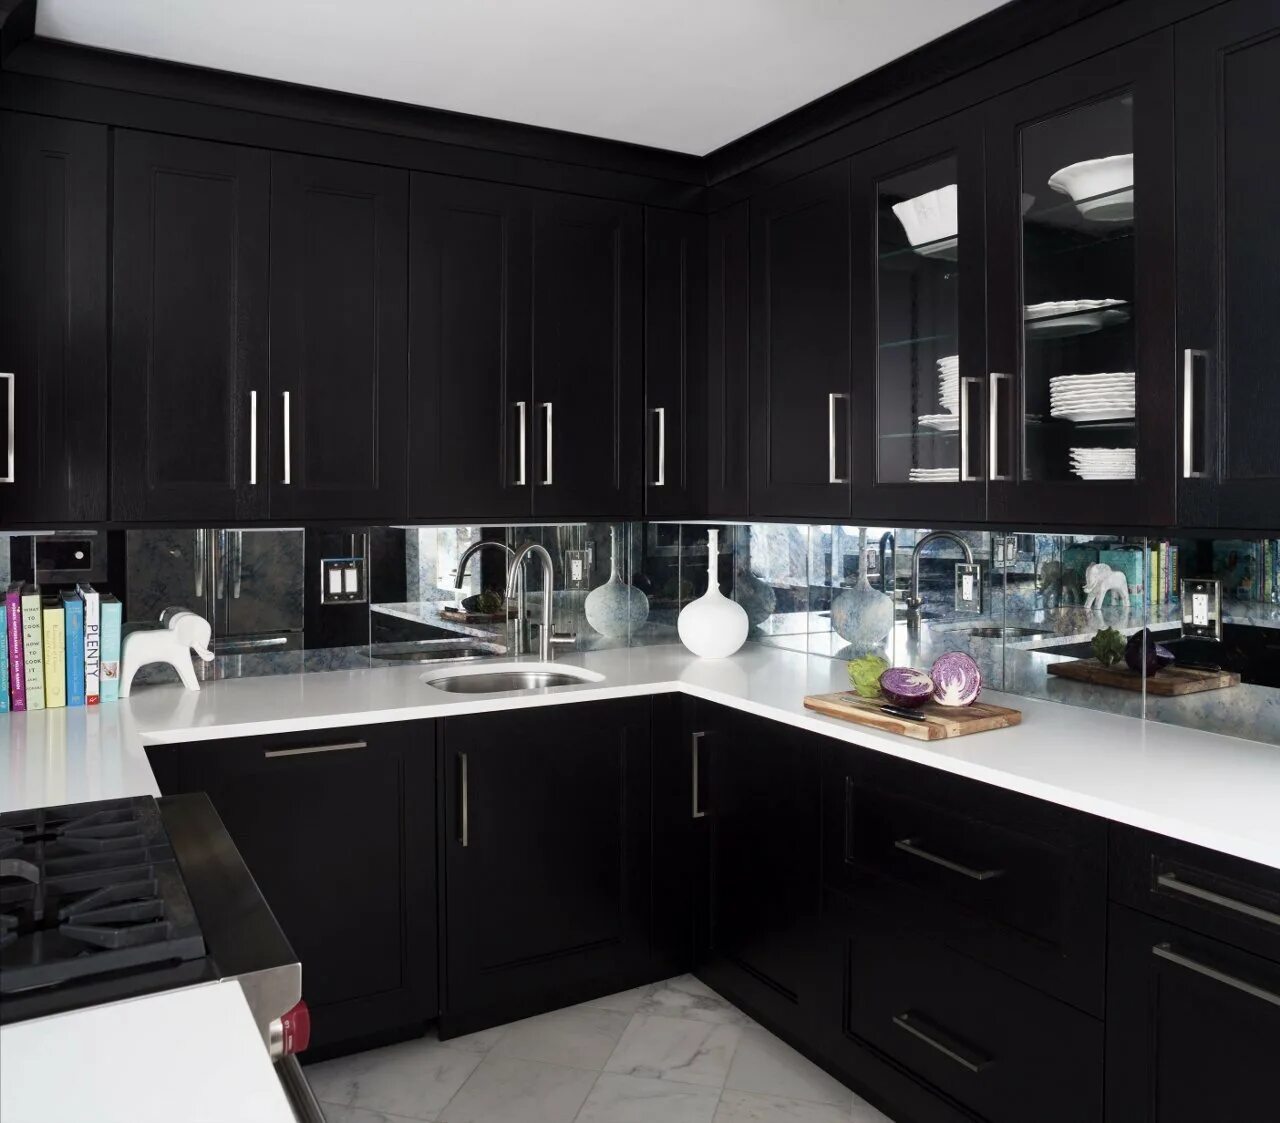 Черная глянцевая кухня икеа. Кухня ikea с черным фартуком. Кухня икеа черно белая. Икеа фасад черный глянец. Столешница черная глянцевая